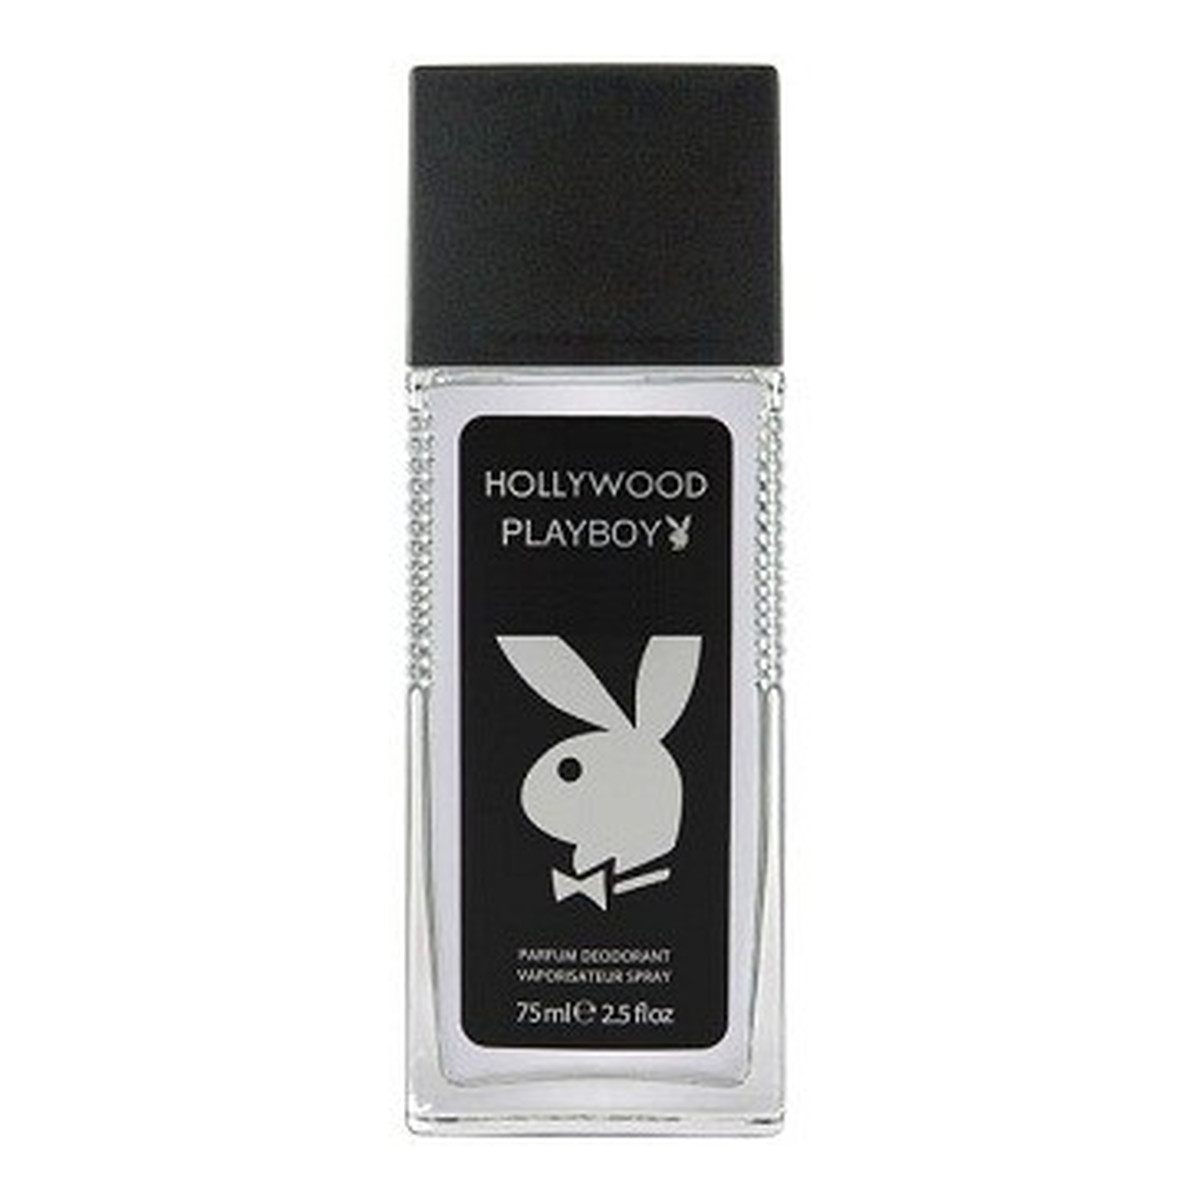 Playboy Hollywood Dezodorant Spray 75ml